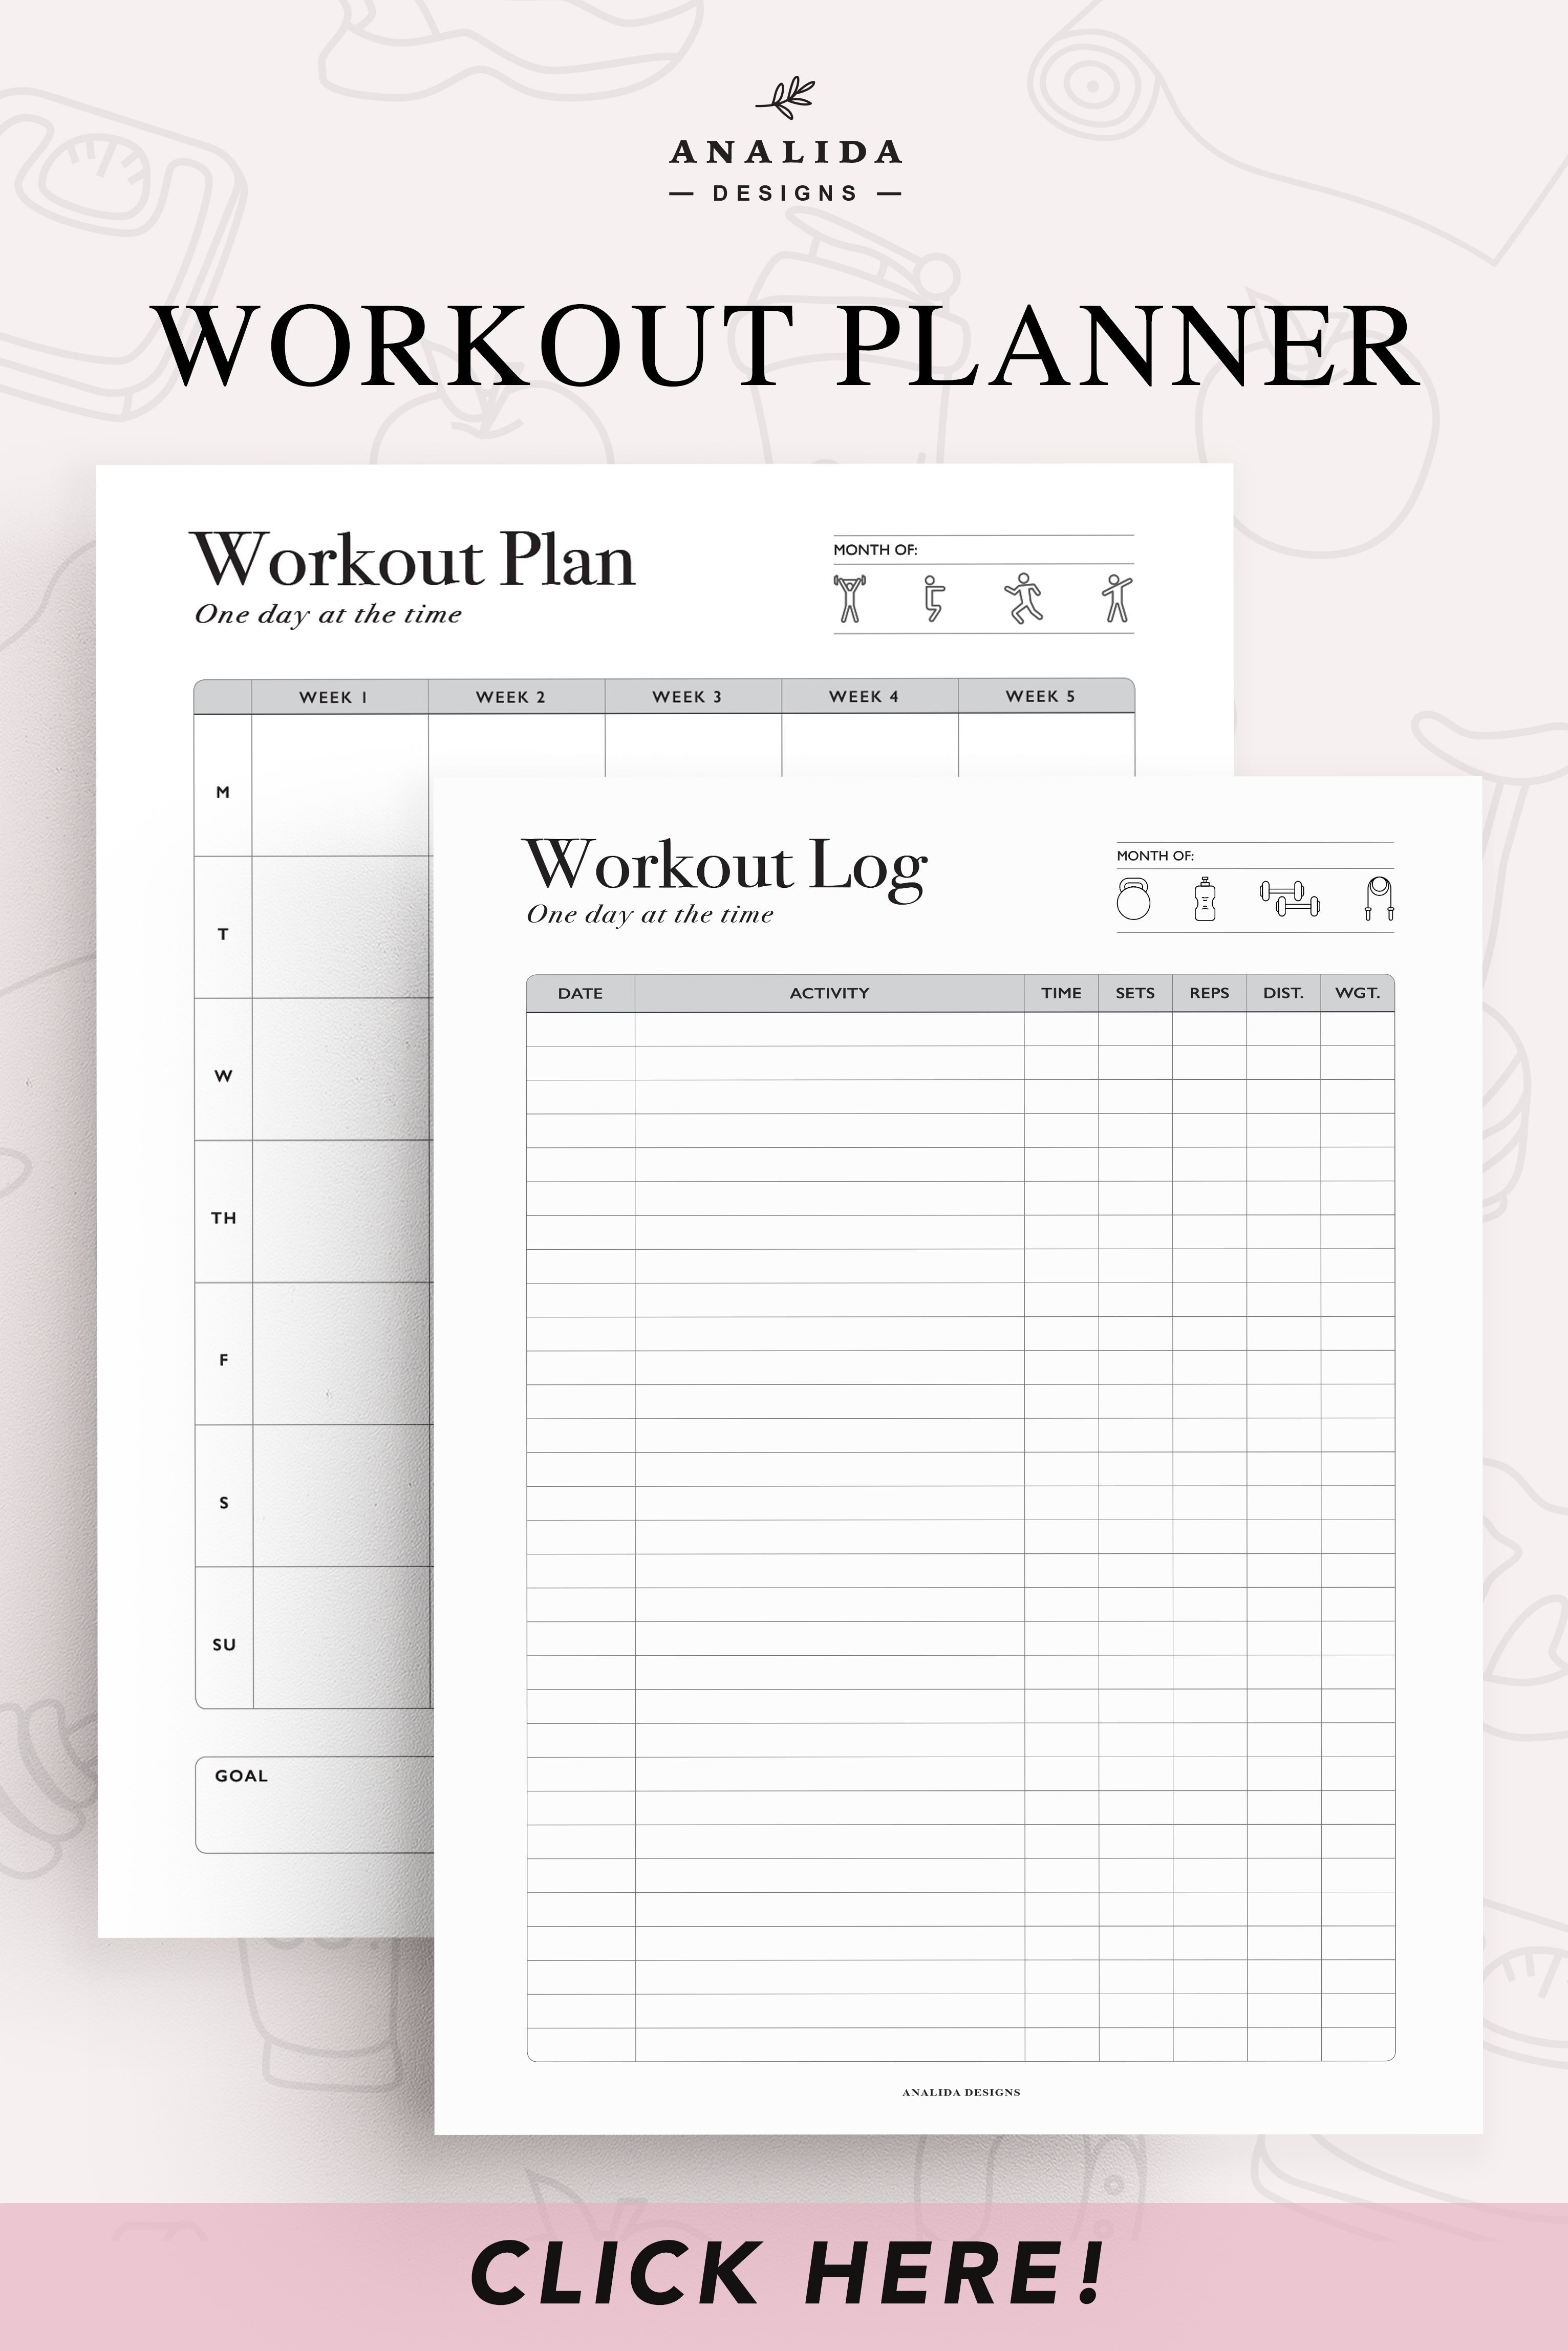 Workout Planner Printable, Exercise Log, Workout Template, Workout Calendar, Fitness Planner - Workout Planner Printable, Exercise Log, Workout Template, Workout Calendar, Fitness Planner -   16 monthly fitness Goals ideas